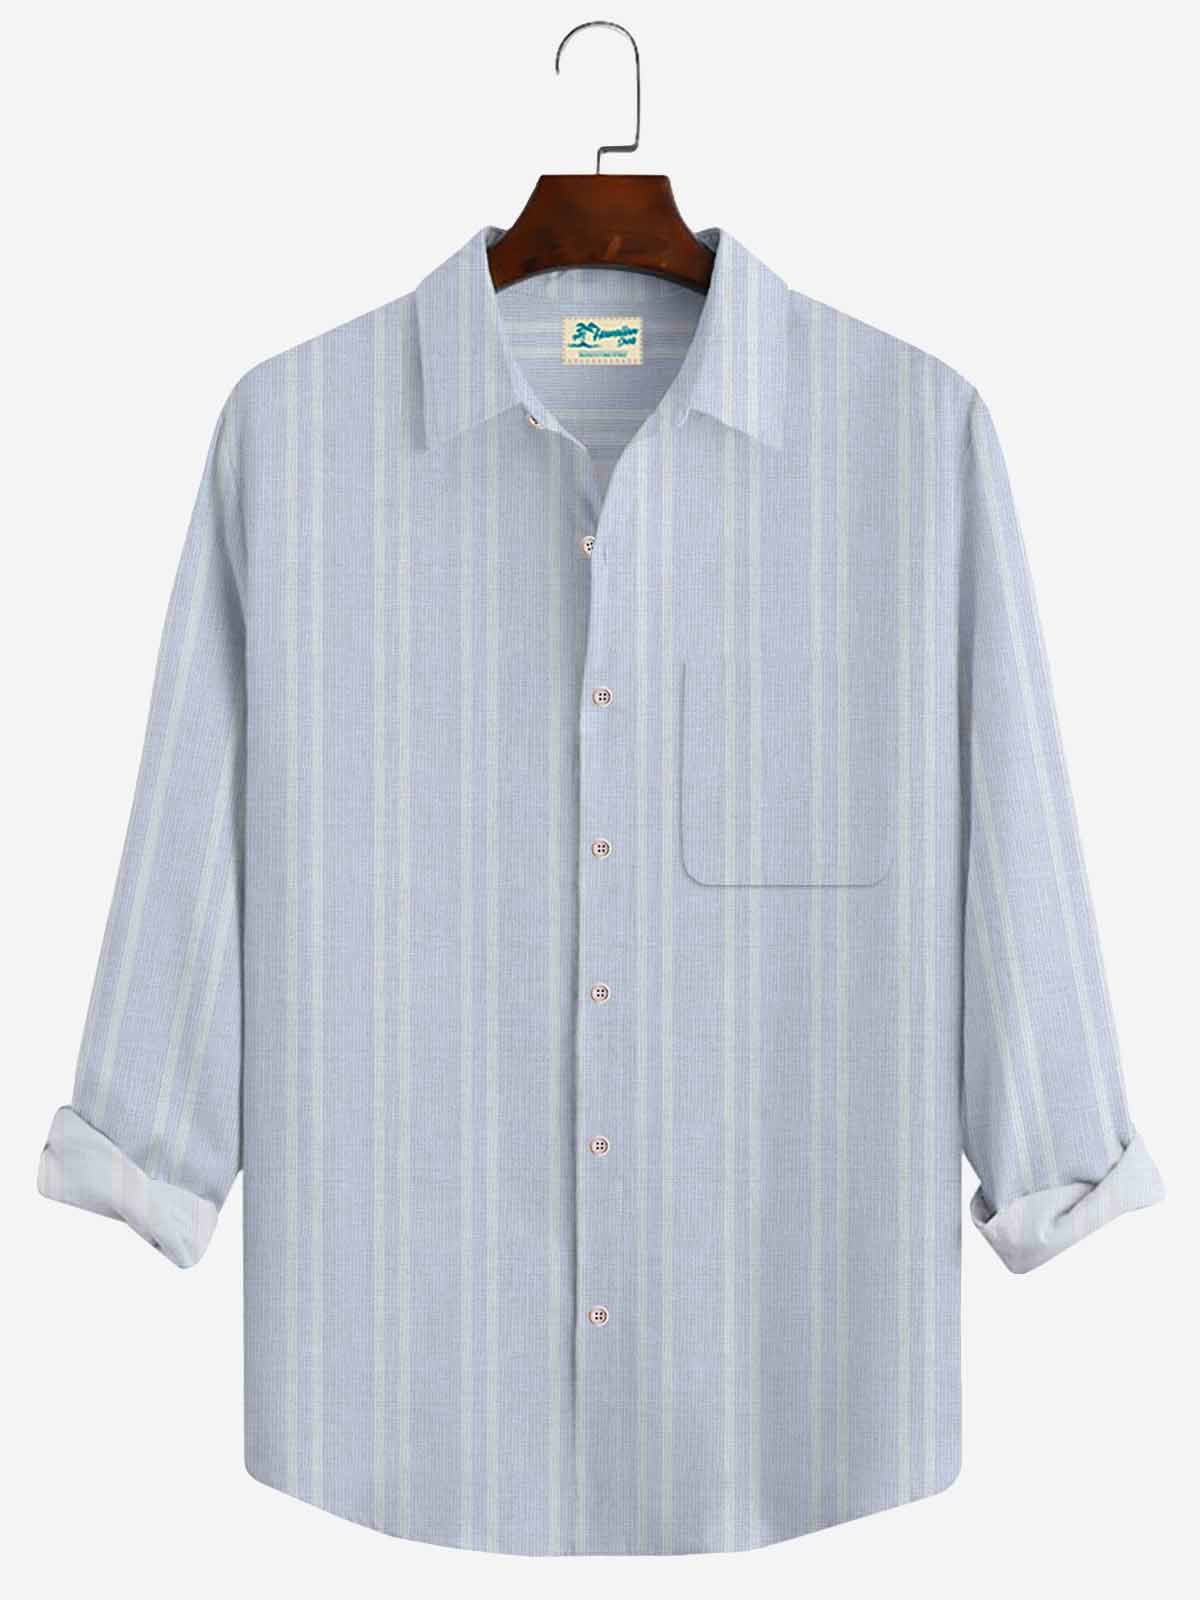 JoyMitty Holiday Beach Casual Blend Light Blue Men's Long Sleeve Striped Shirts Stretch Plus SIze Camp Pocket Shirts